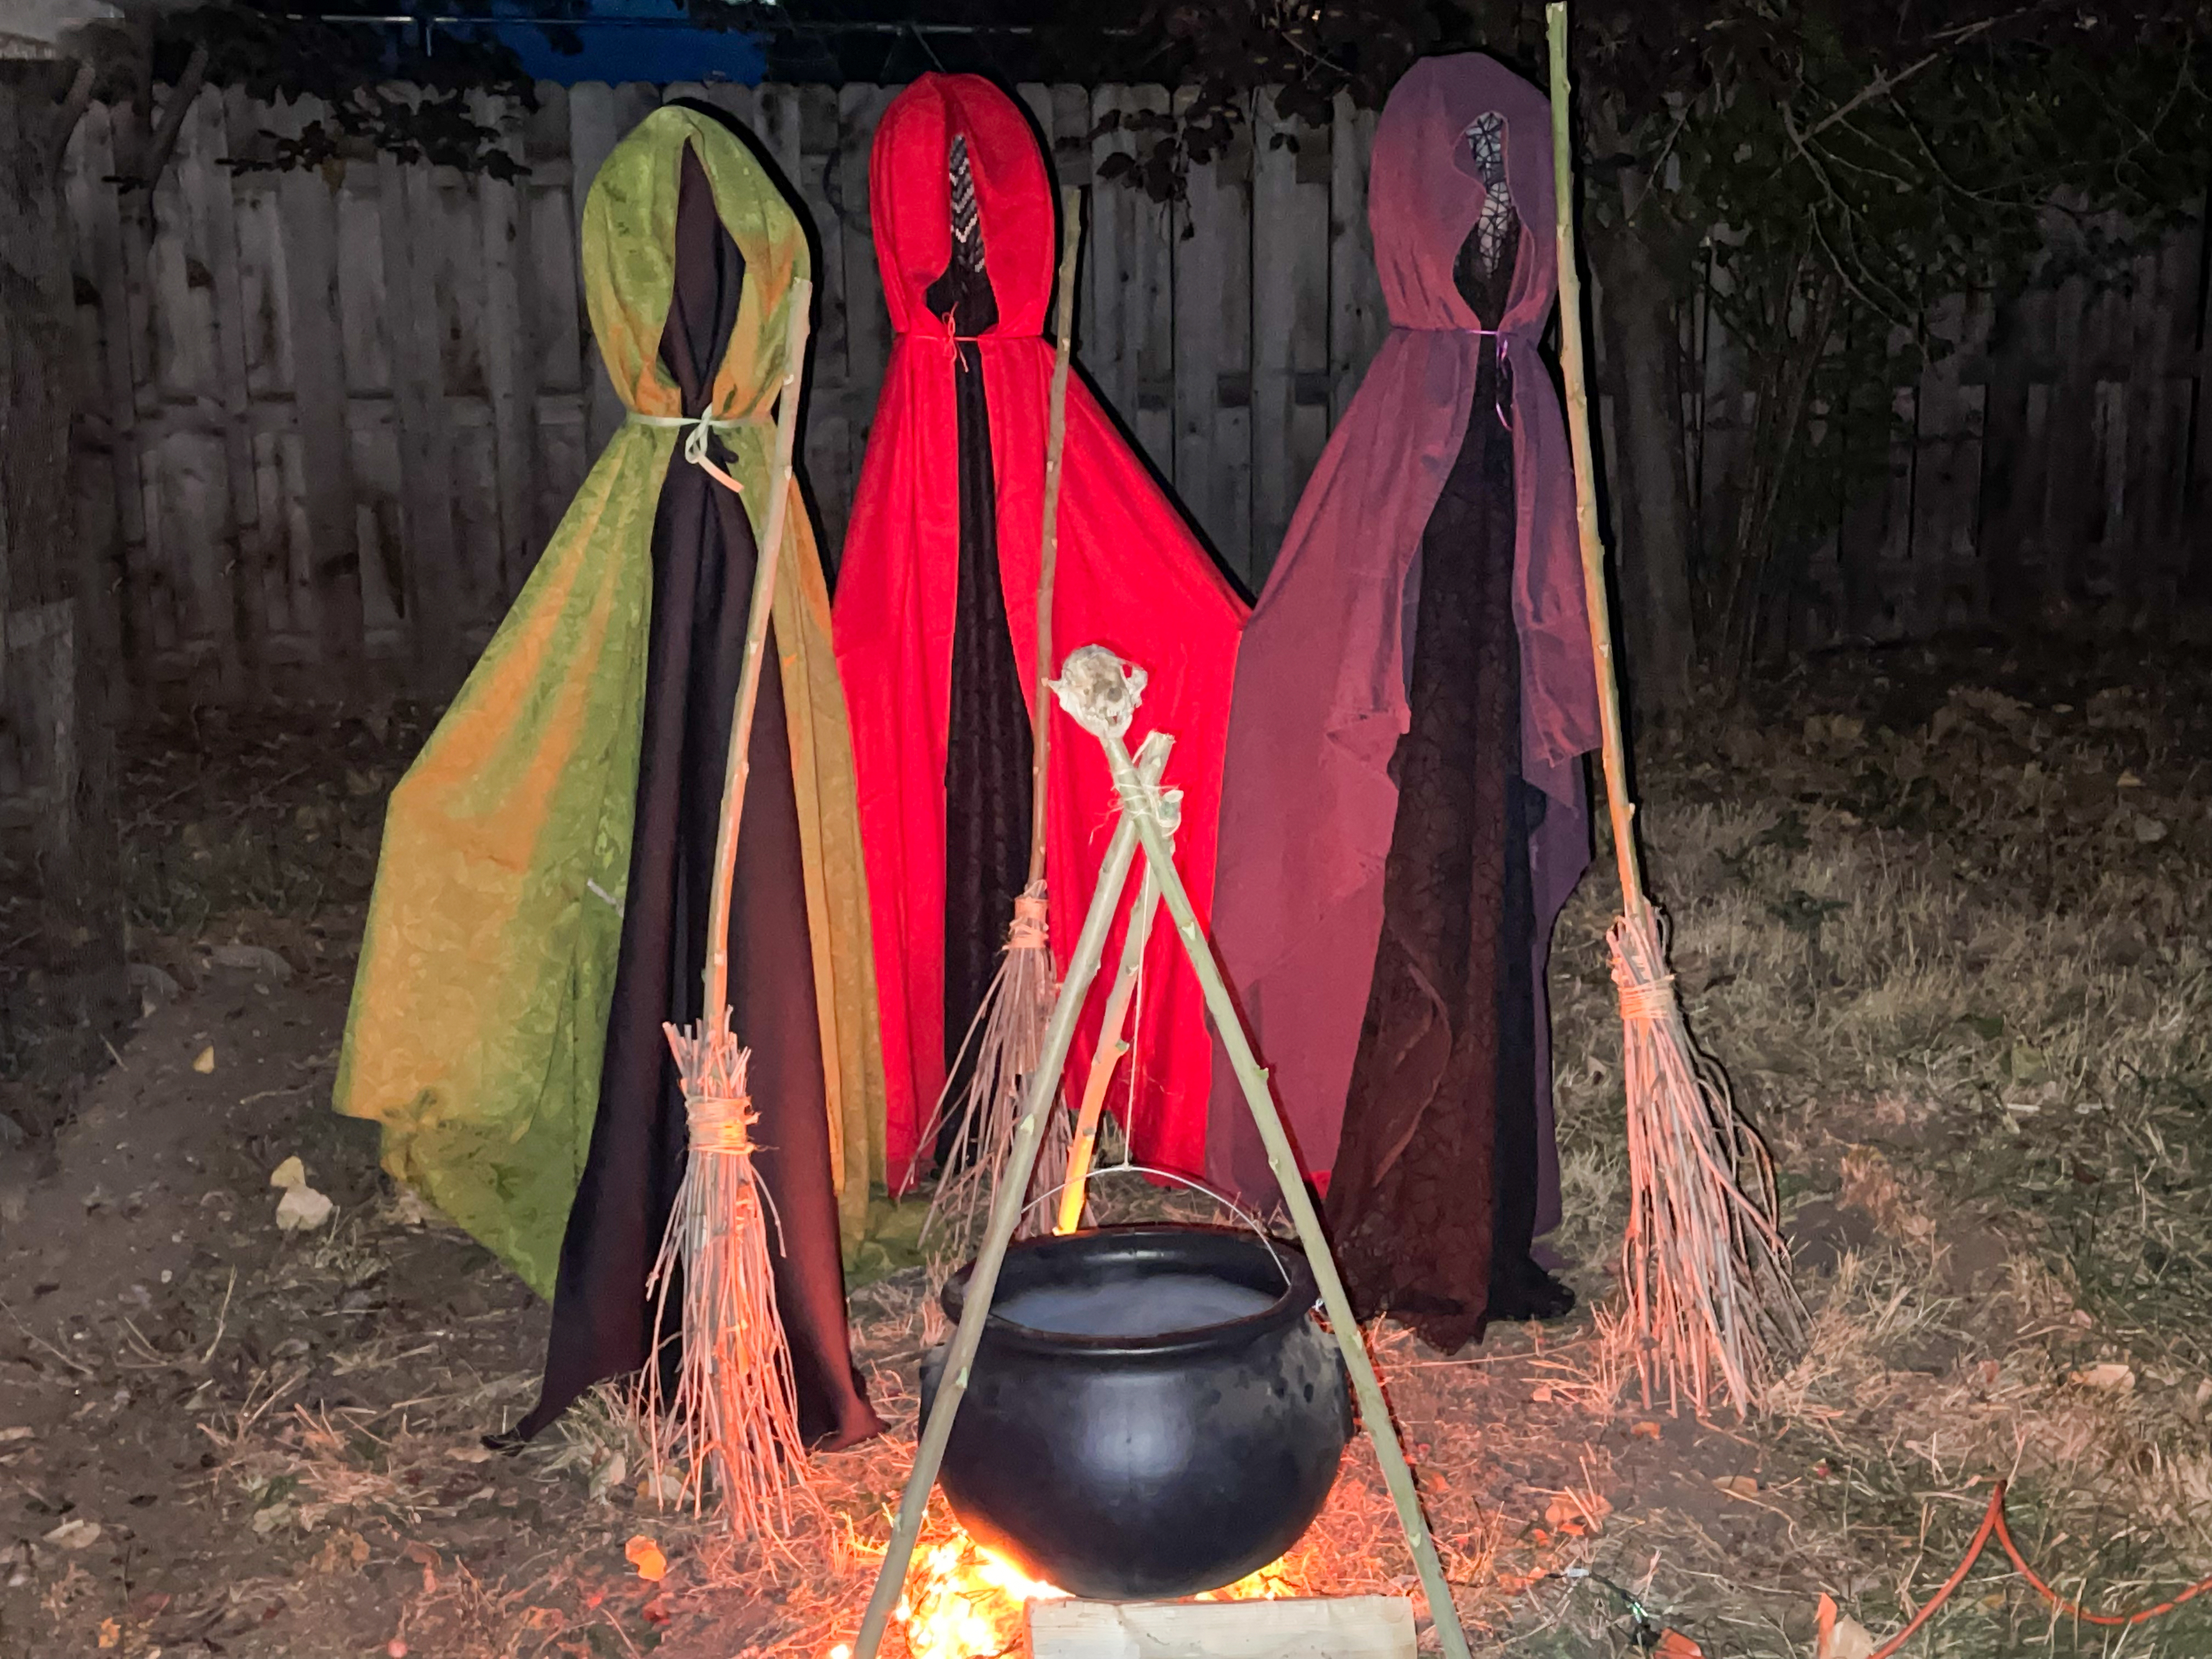 DIY Life-Size 'Hocus Pocus' Witches Halloween Decoration